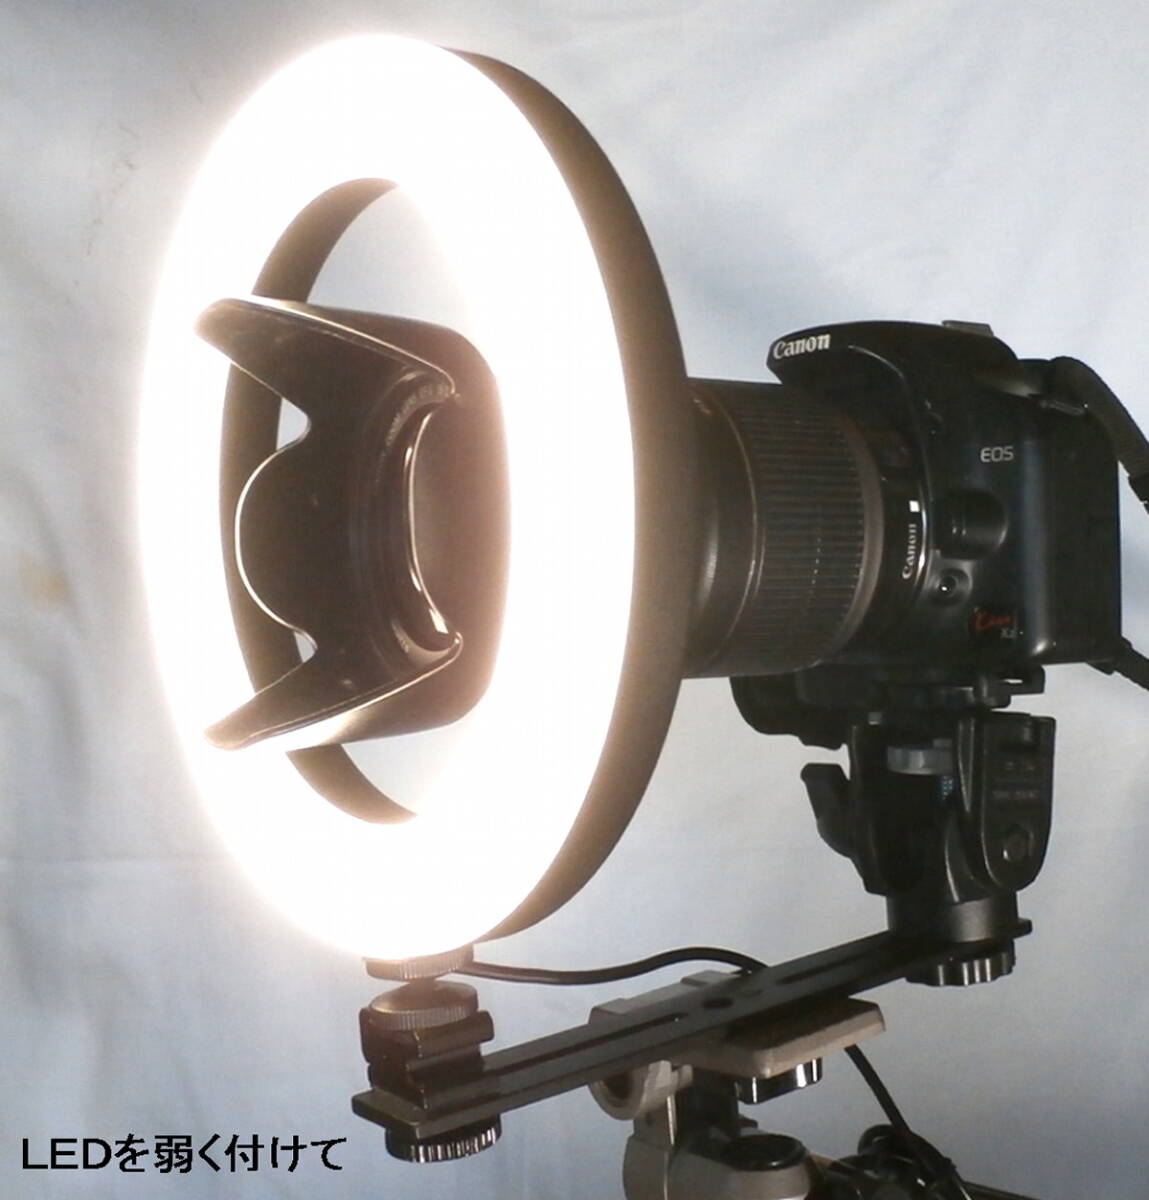 LEDリングライト セット 一眼レフ カメラ 撮影用 照度調節可能 20cm径 8W 5V USB給電タイプ Manprotto 234 雲台 設置済み 自作組み立て品の画像1